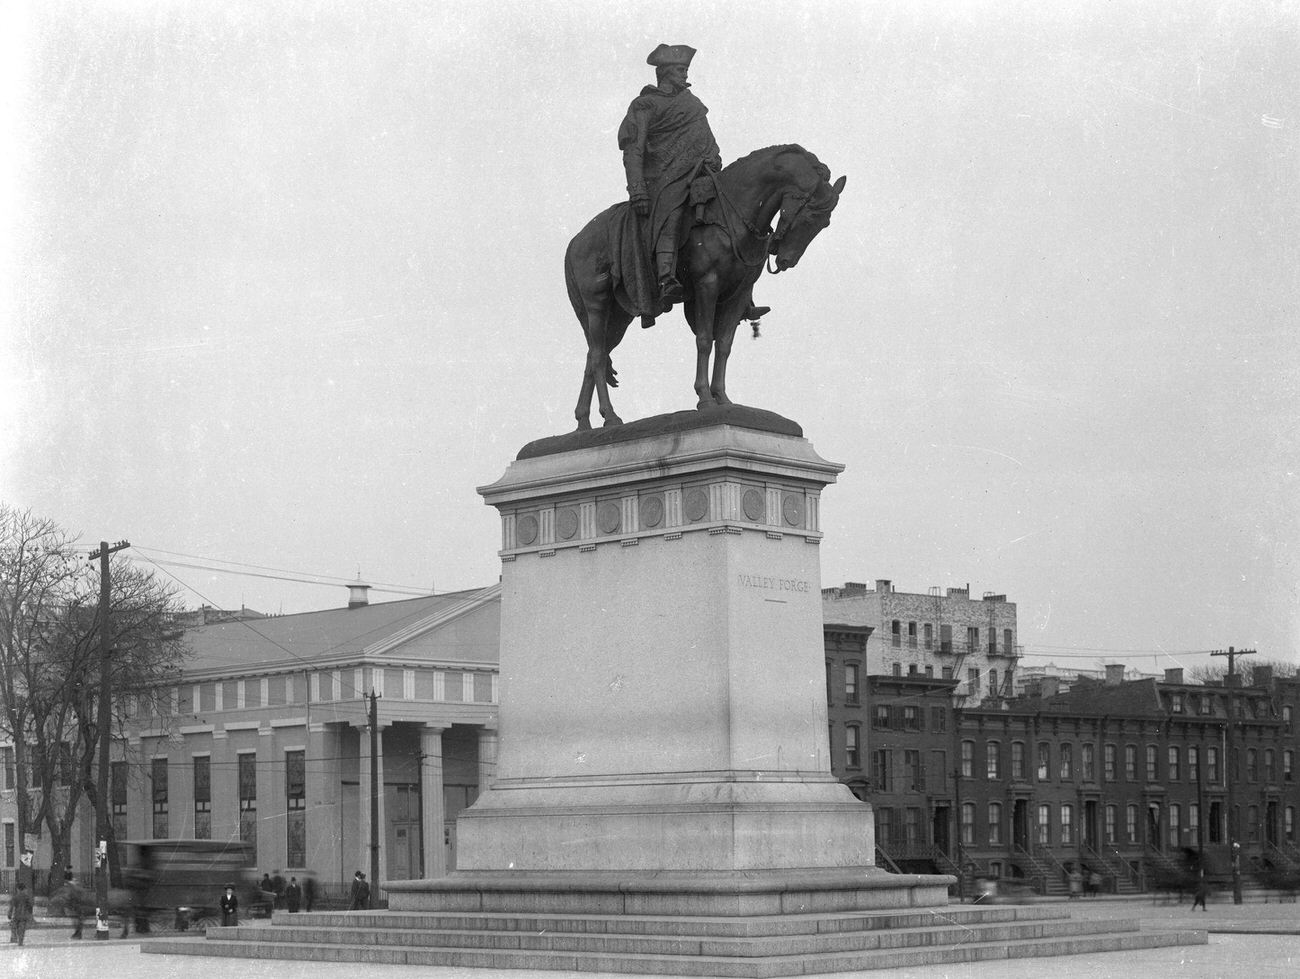 Statue Of George Washington At Continental Army Plaza, Williamsburg, Brooklyn, 1895